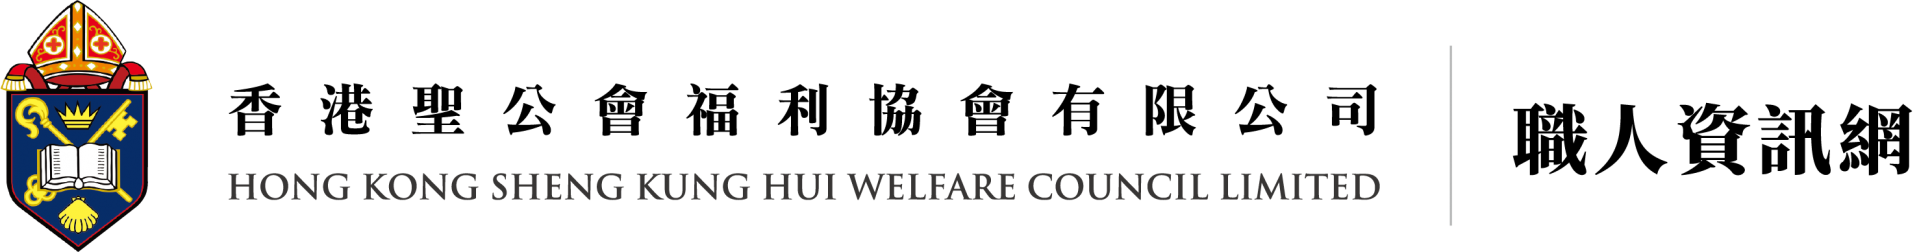 Hong Kong Sheng Kung Hui Welfare Council limited company.